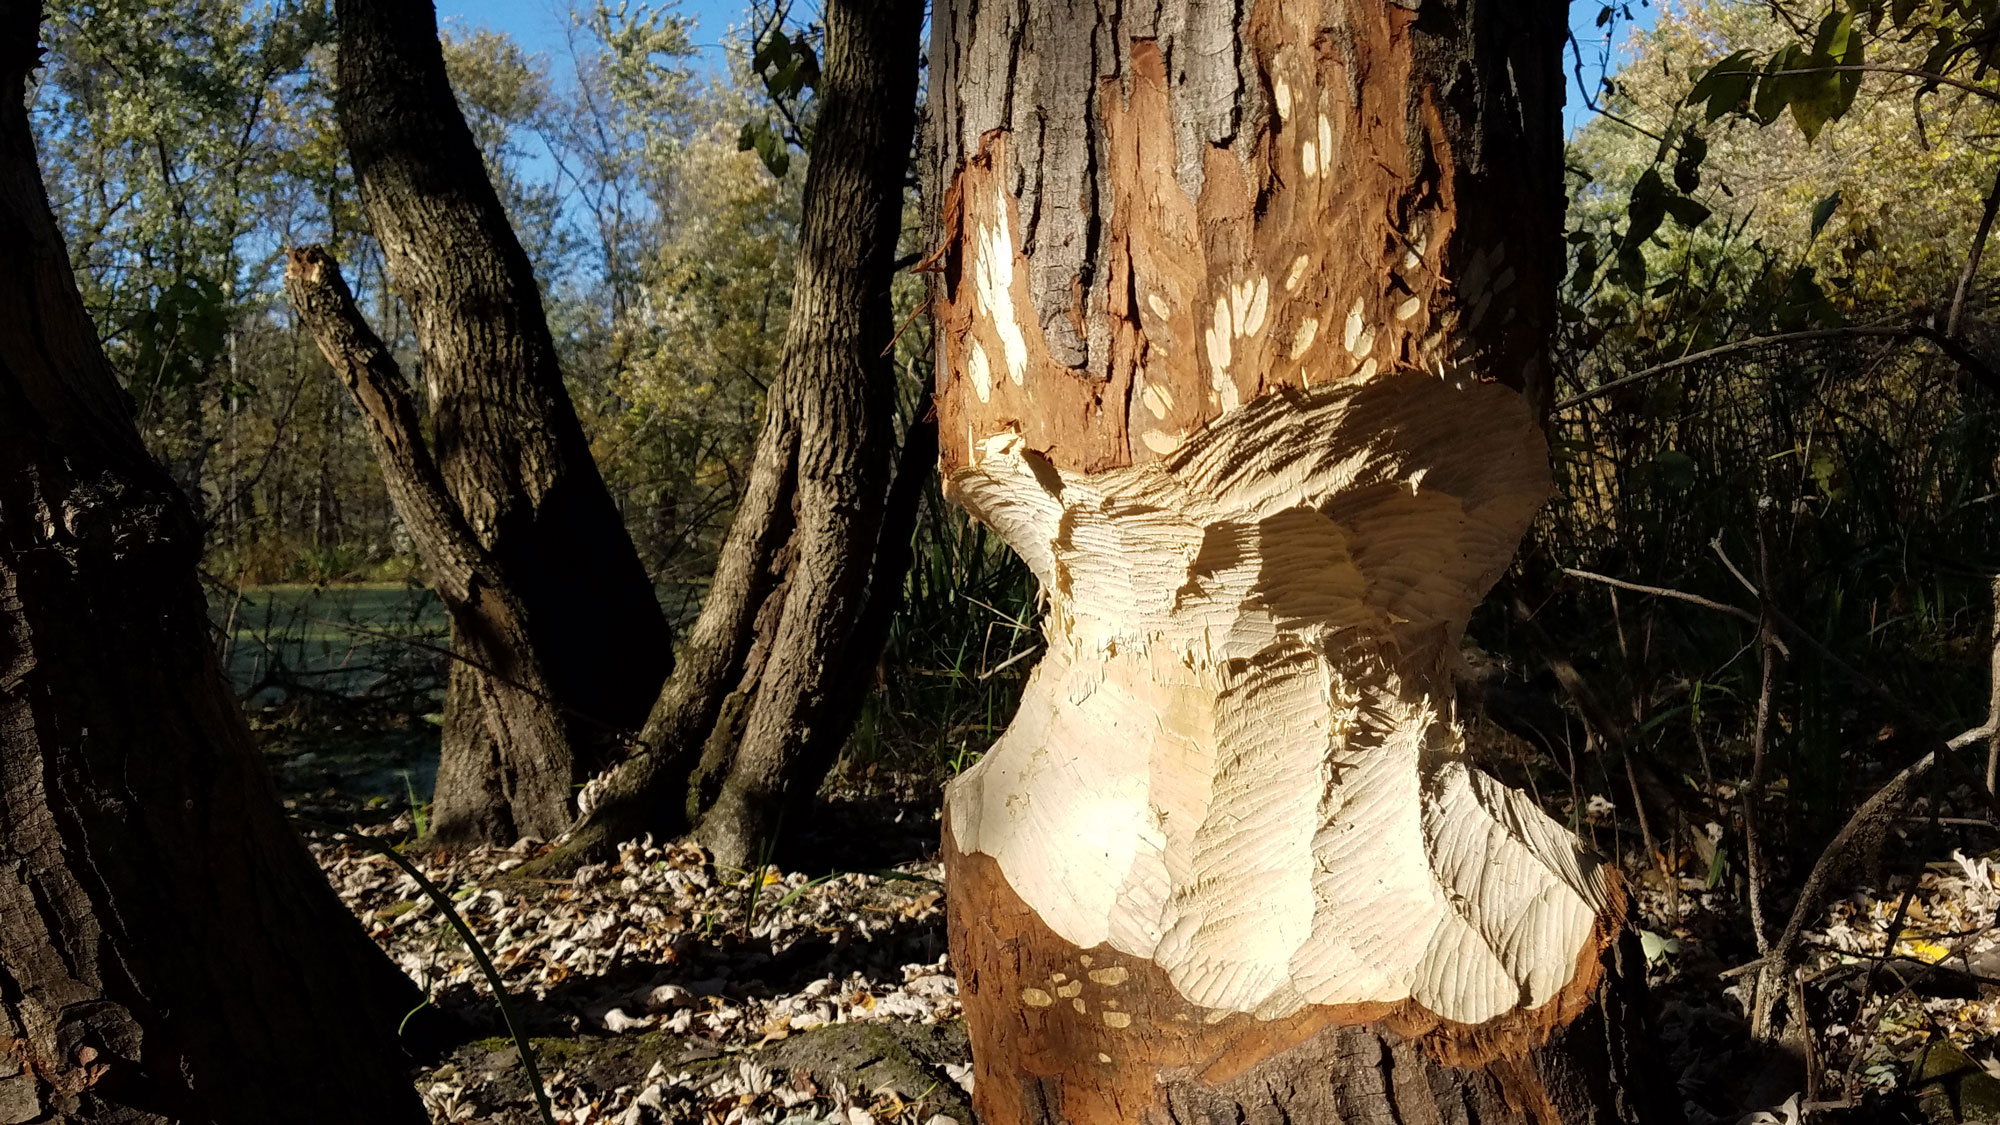 A tree damaged by a beaver.